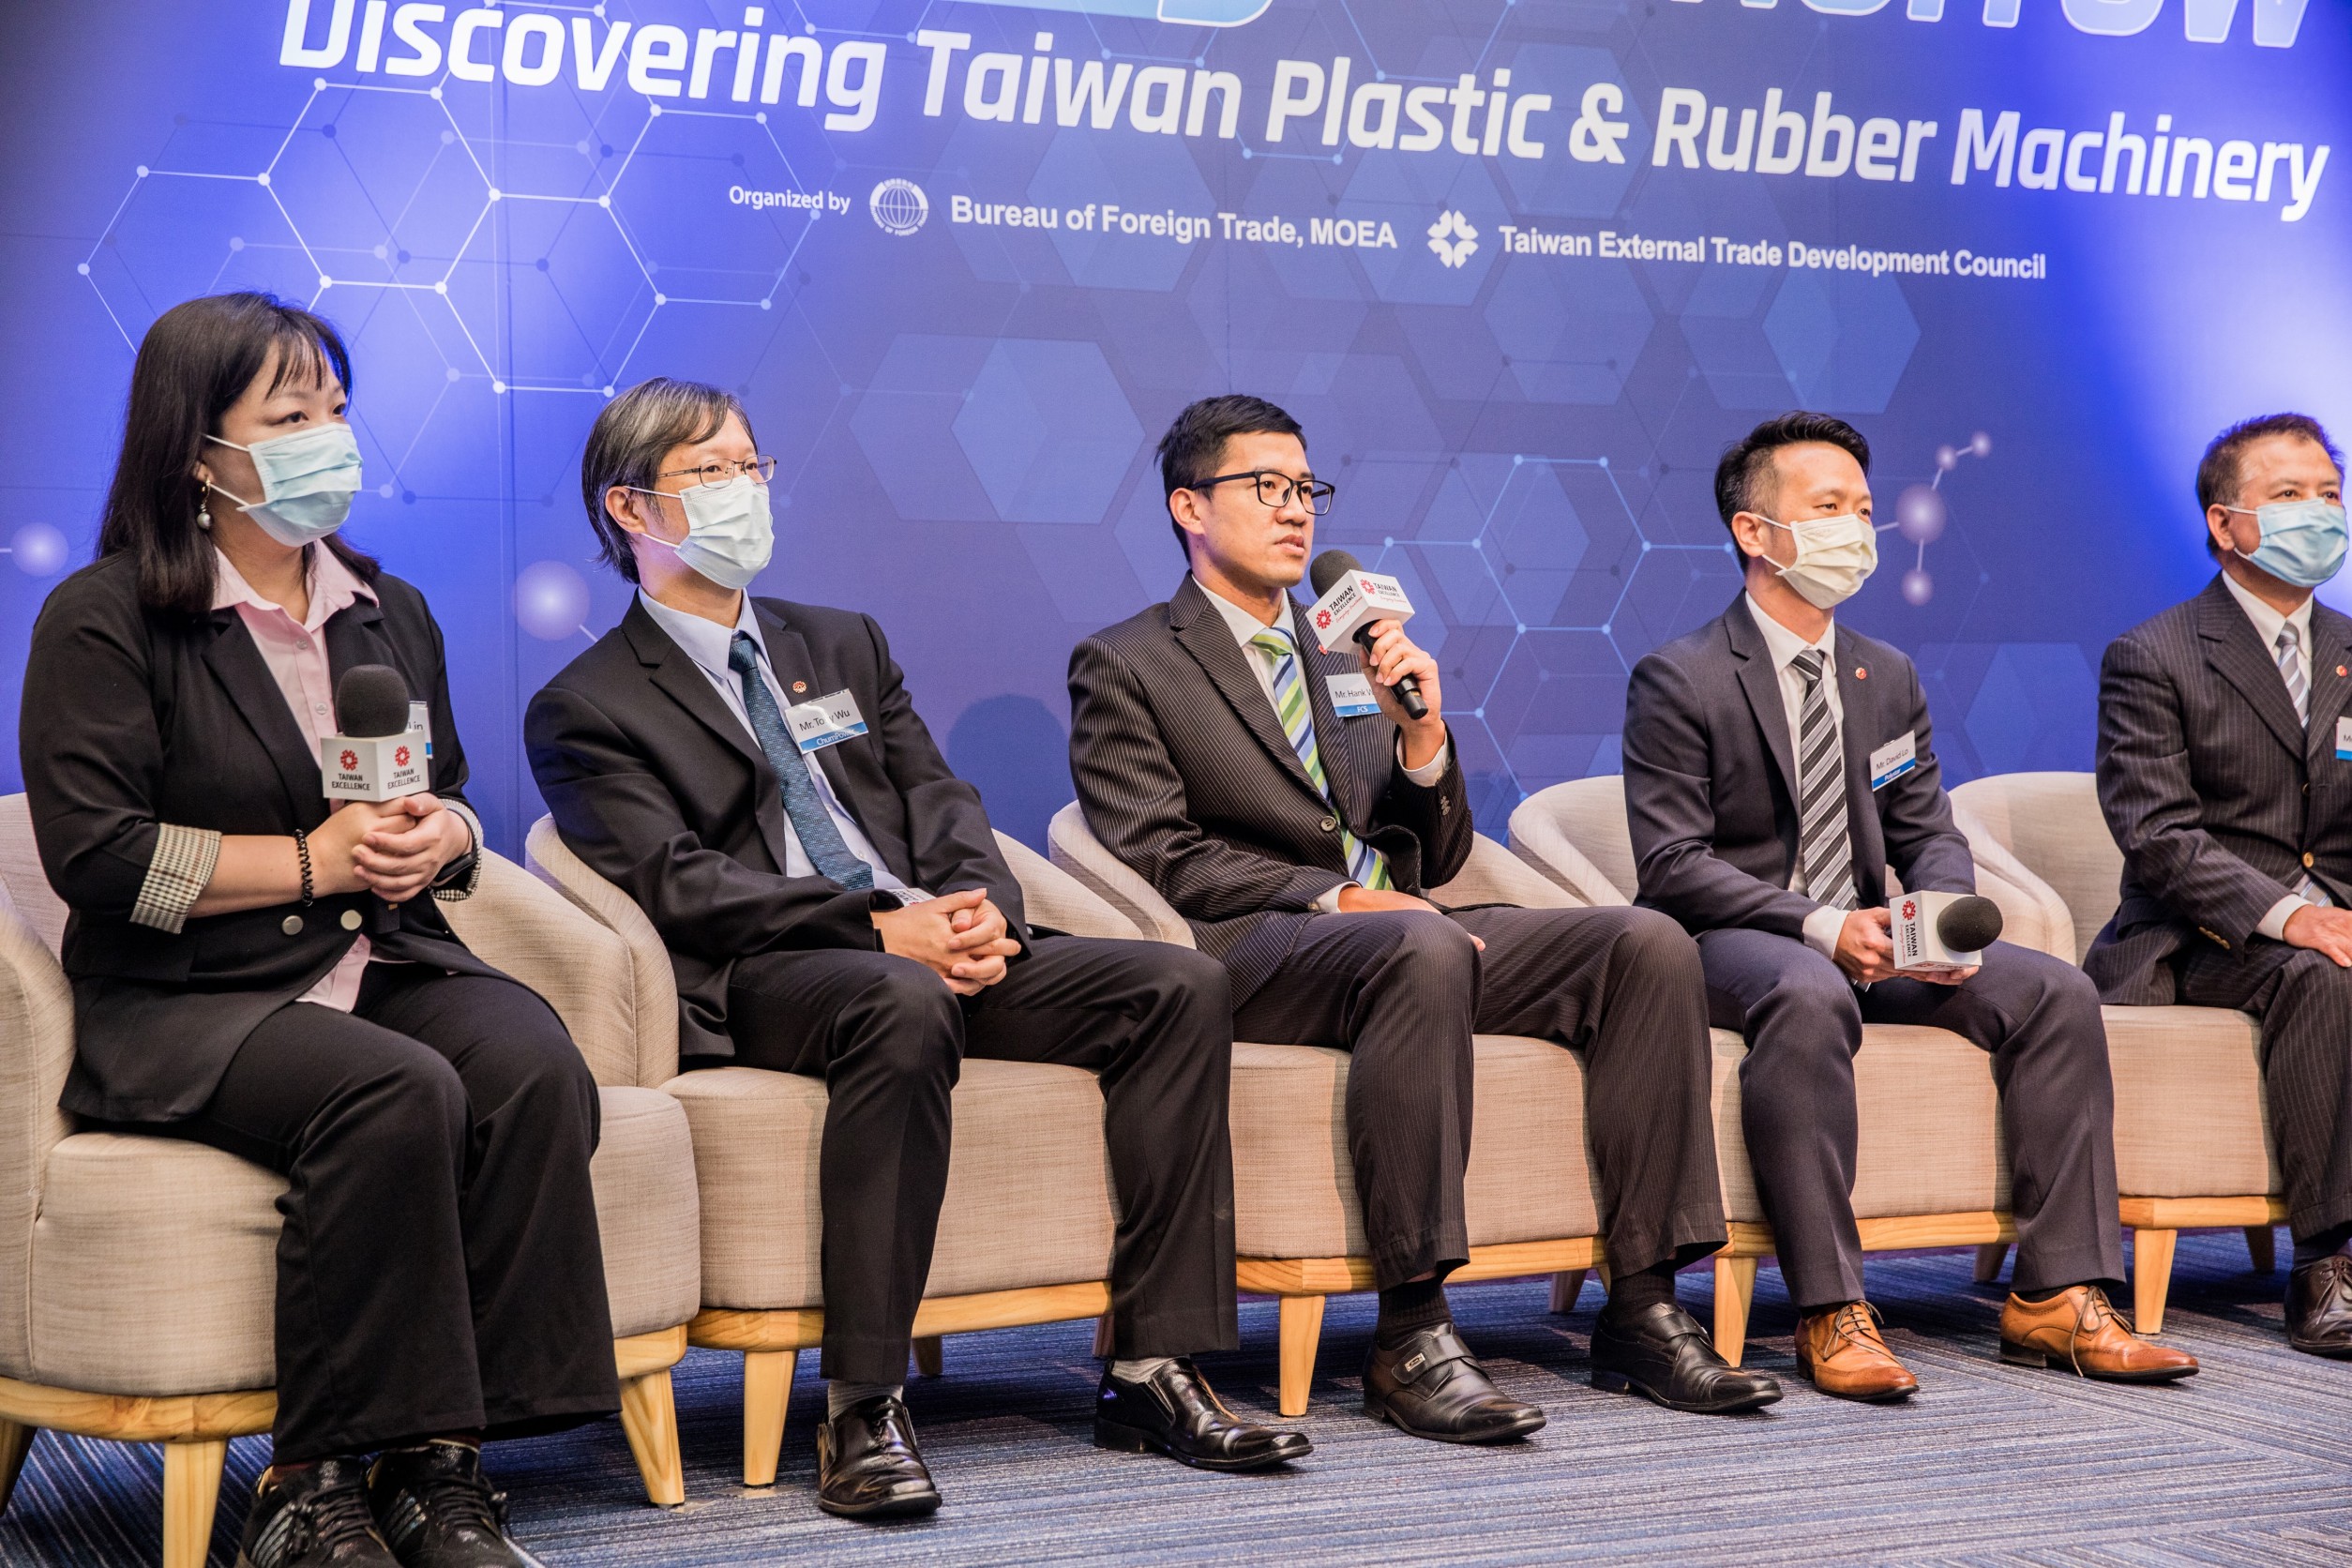 Shaping Tomorrow, Discovering Taiwan Plastic & Rubber Machinery Webinar